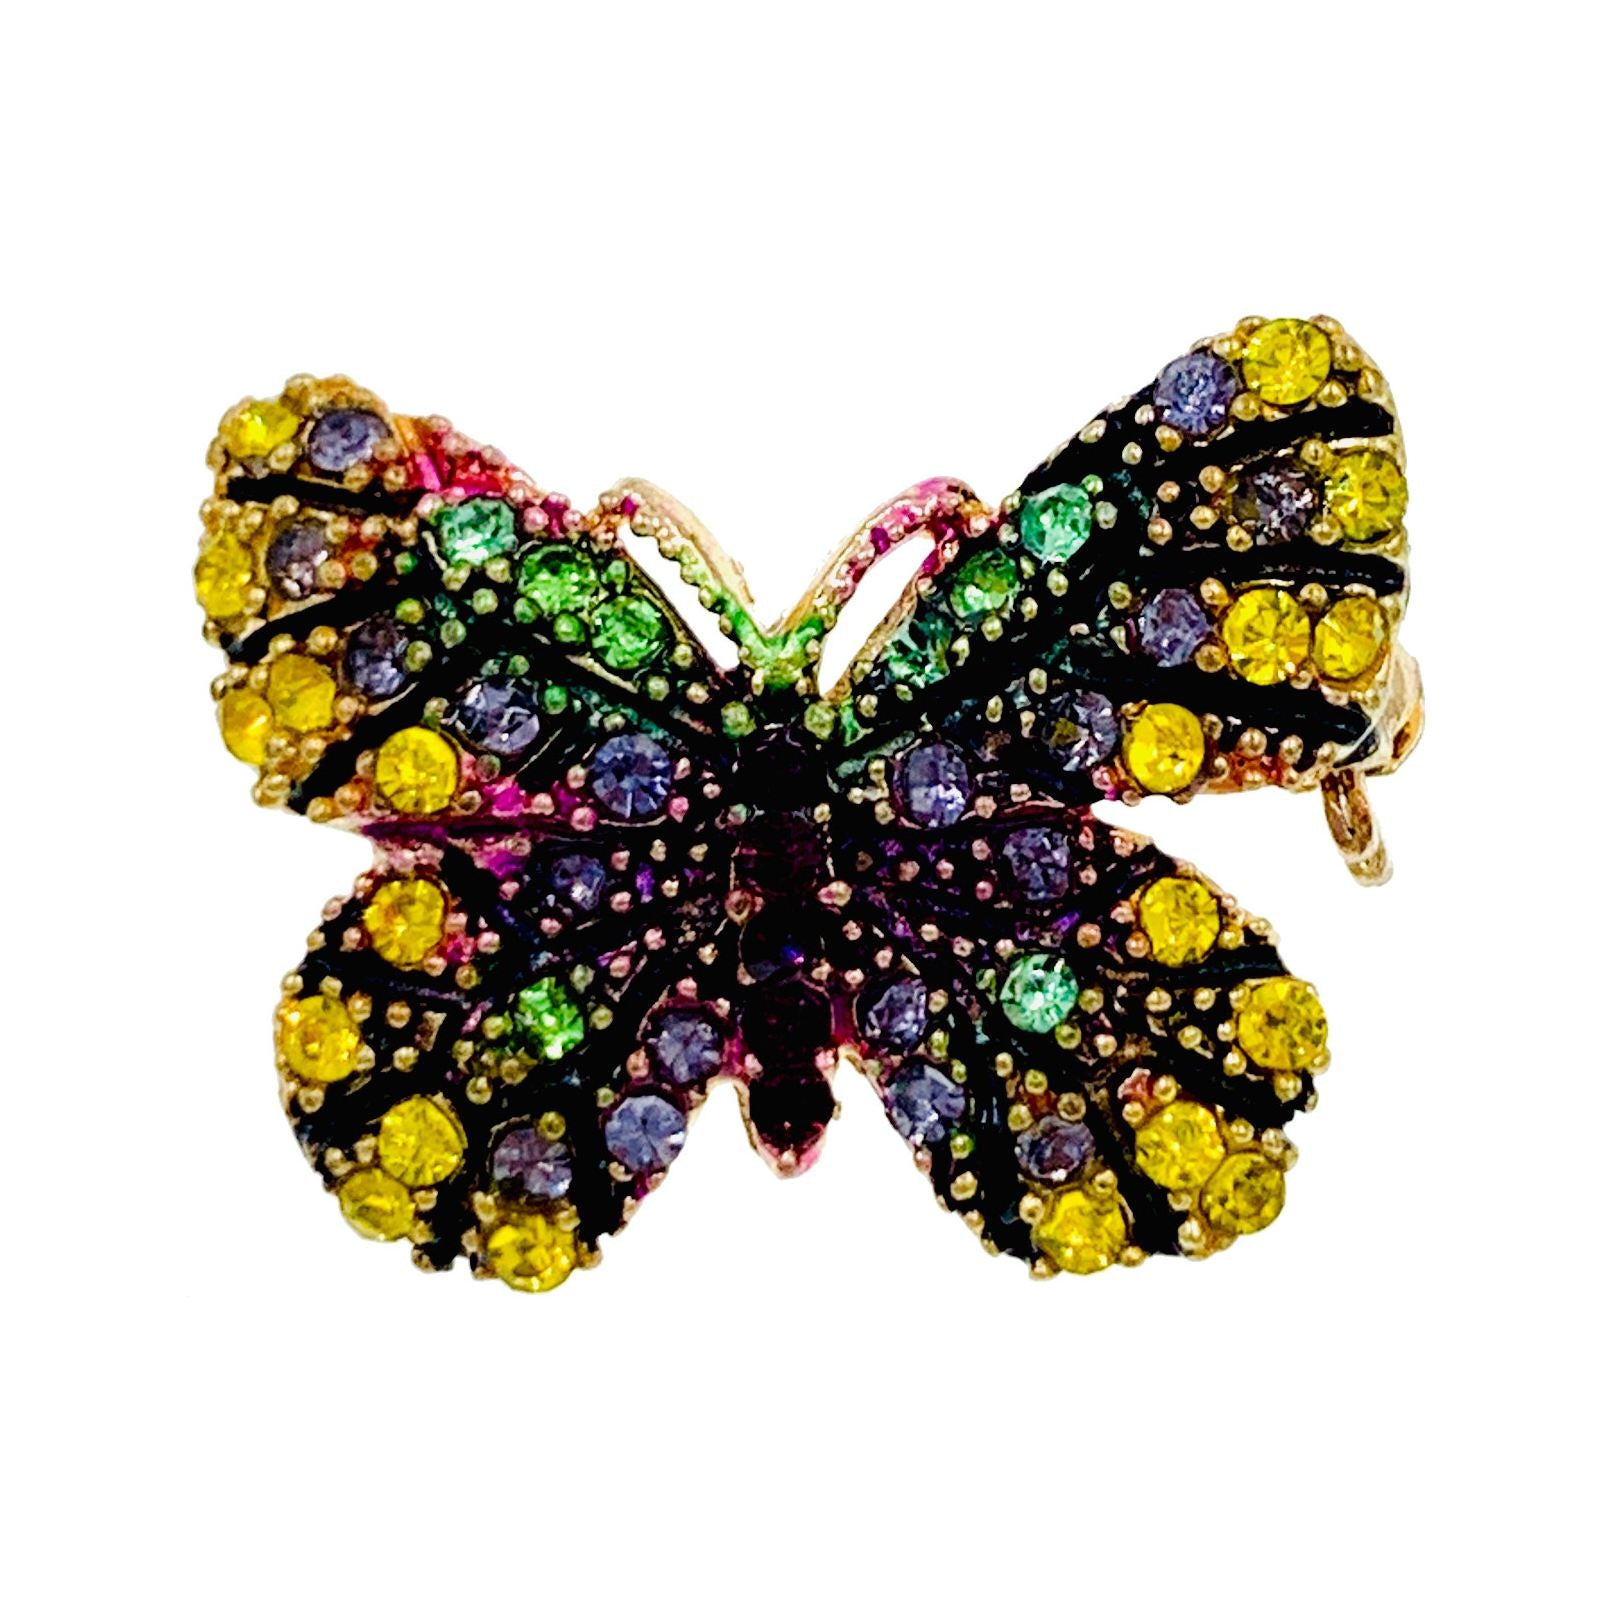 Fairy Handmade Small Butterfly Brooch Pin use Swarovski Elementary Cry